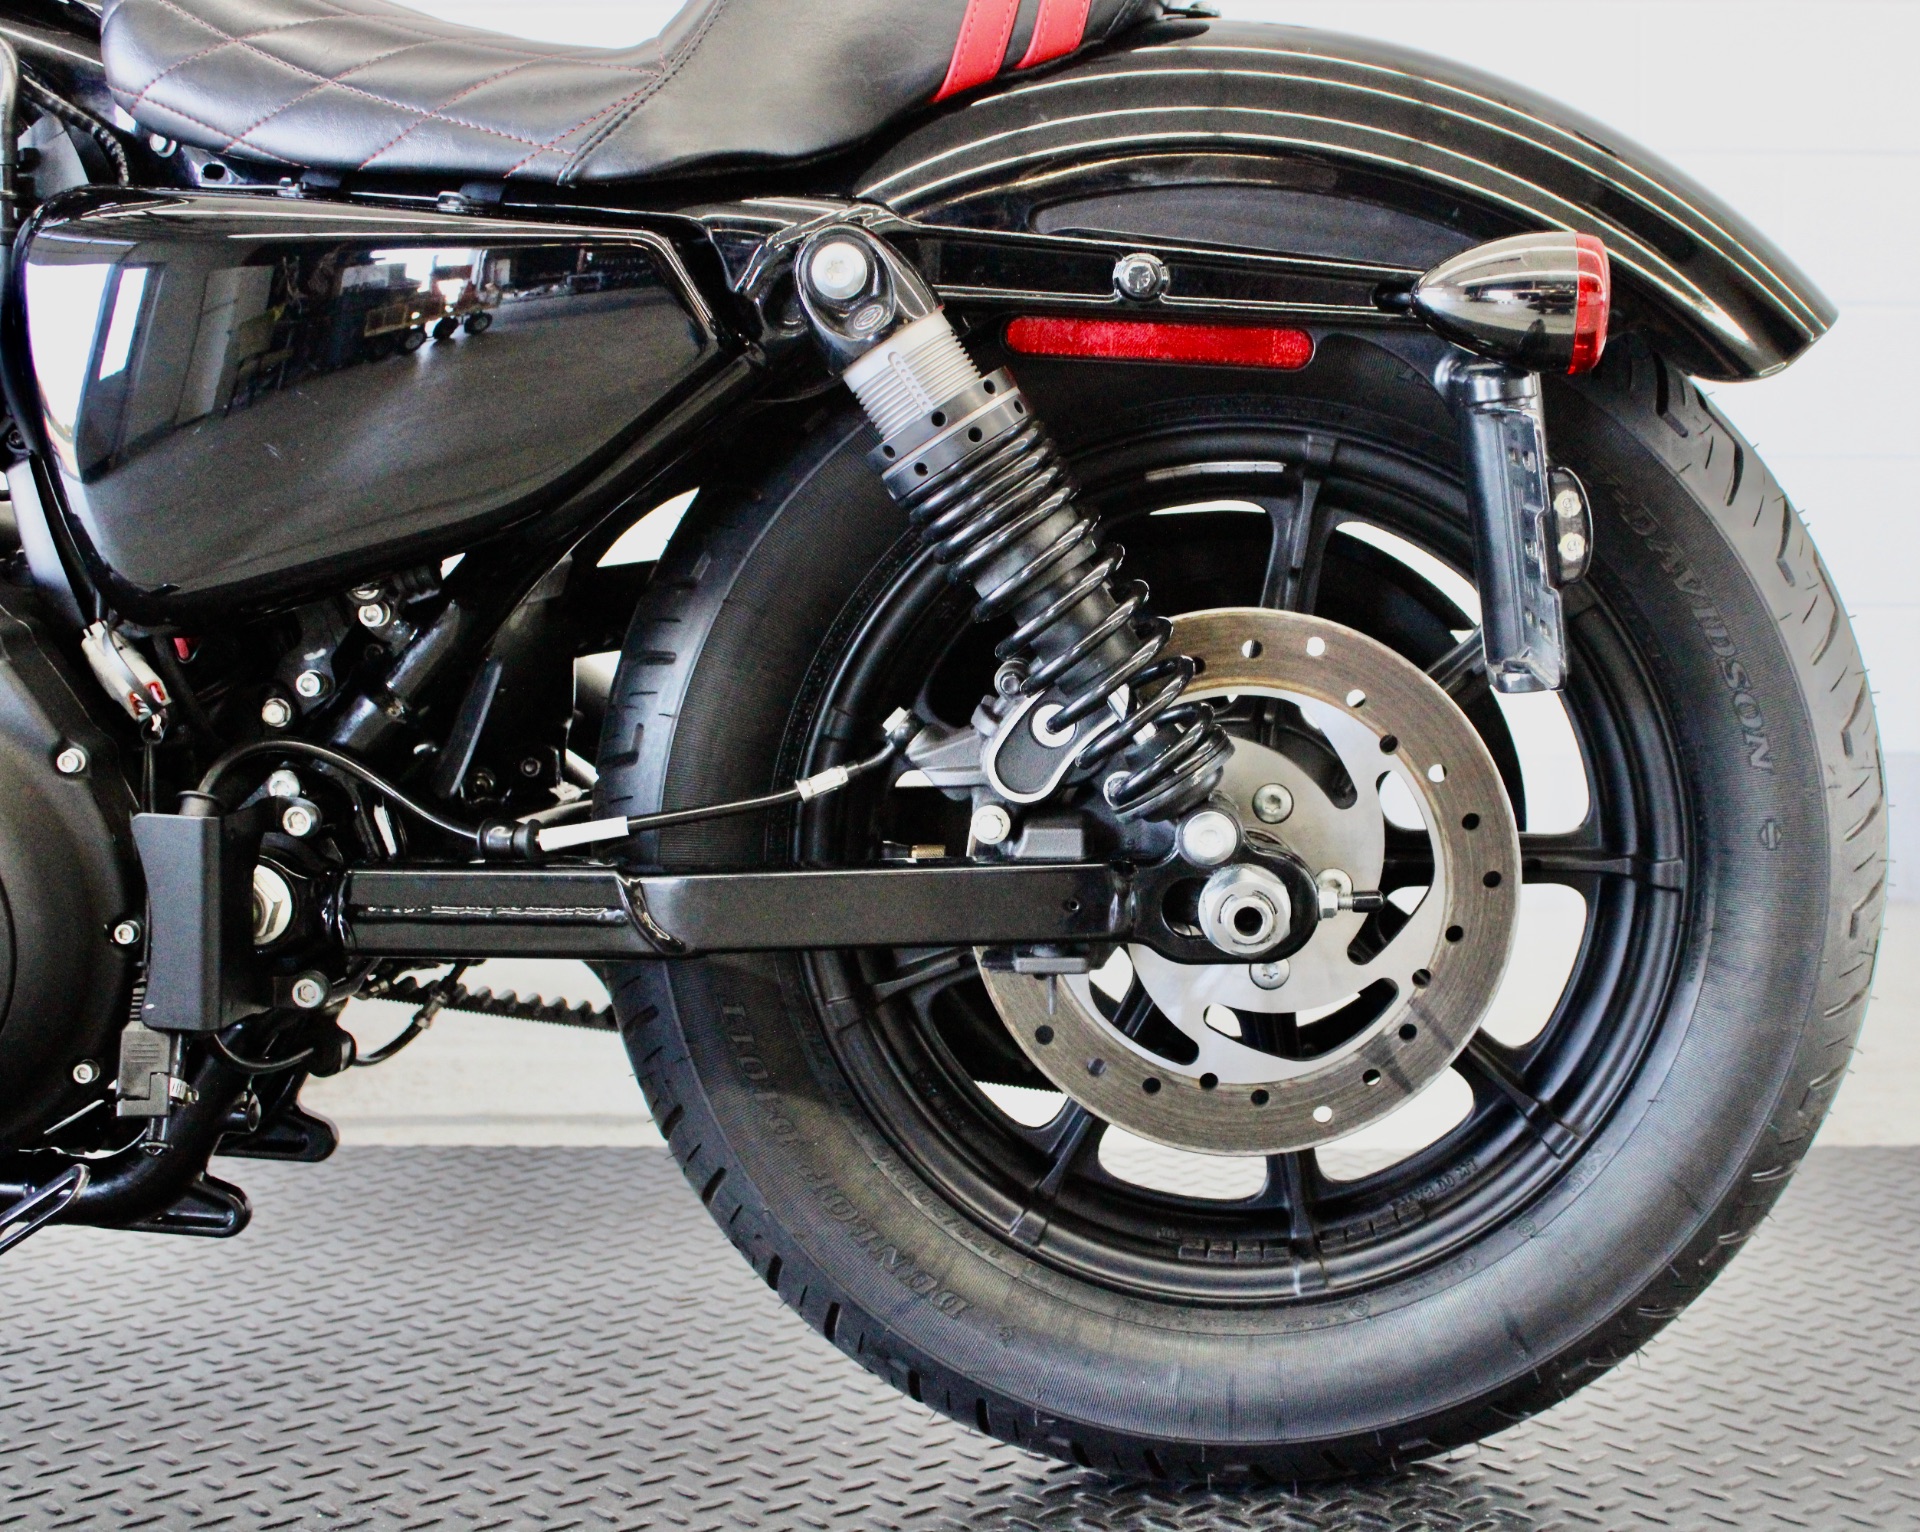 2020 Harley-Davidson Iron 1200™ in Fredericksburg, Virginia - Photo 22